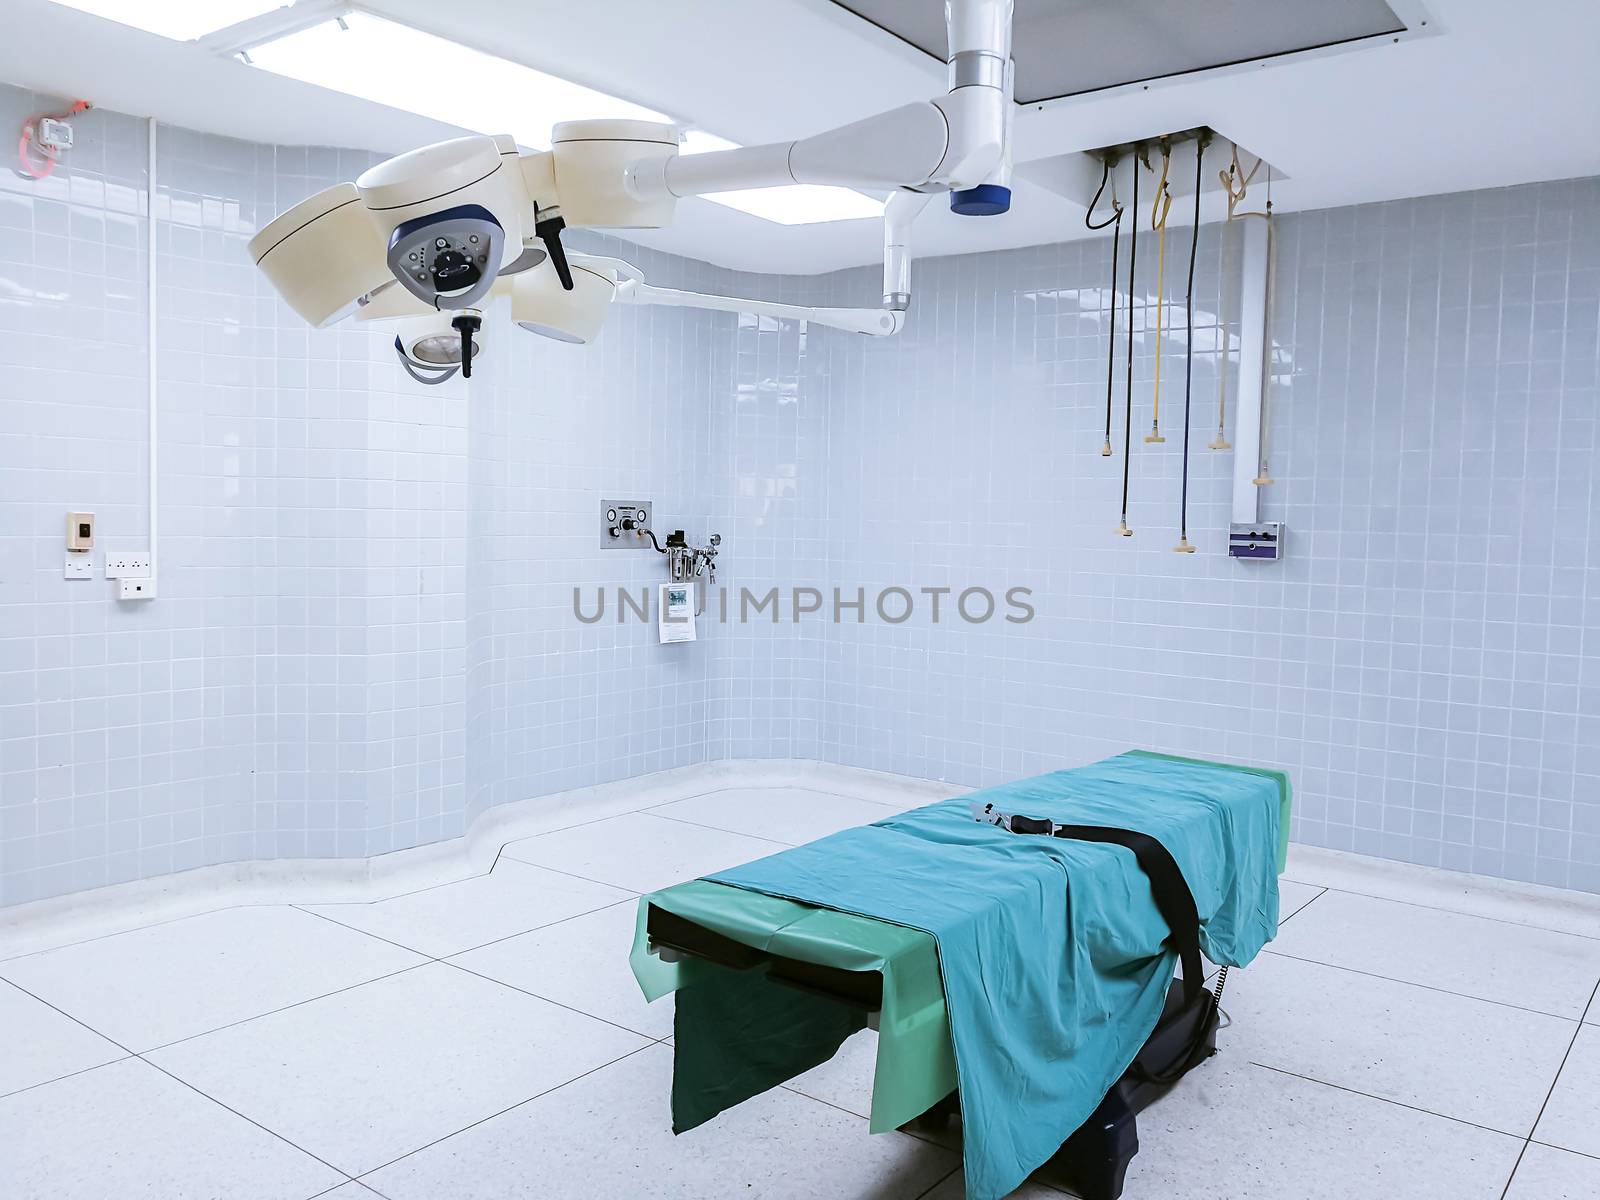 Light illuminated in Surgery Operating room in hospital